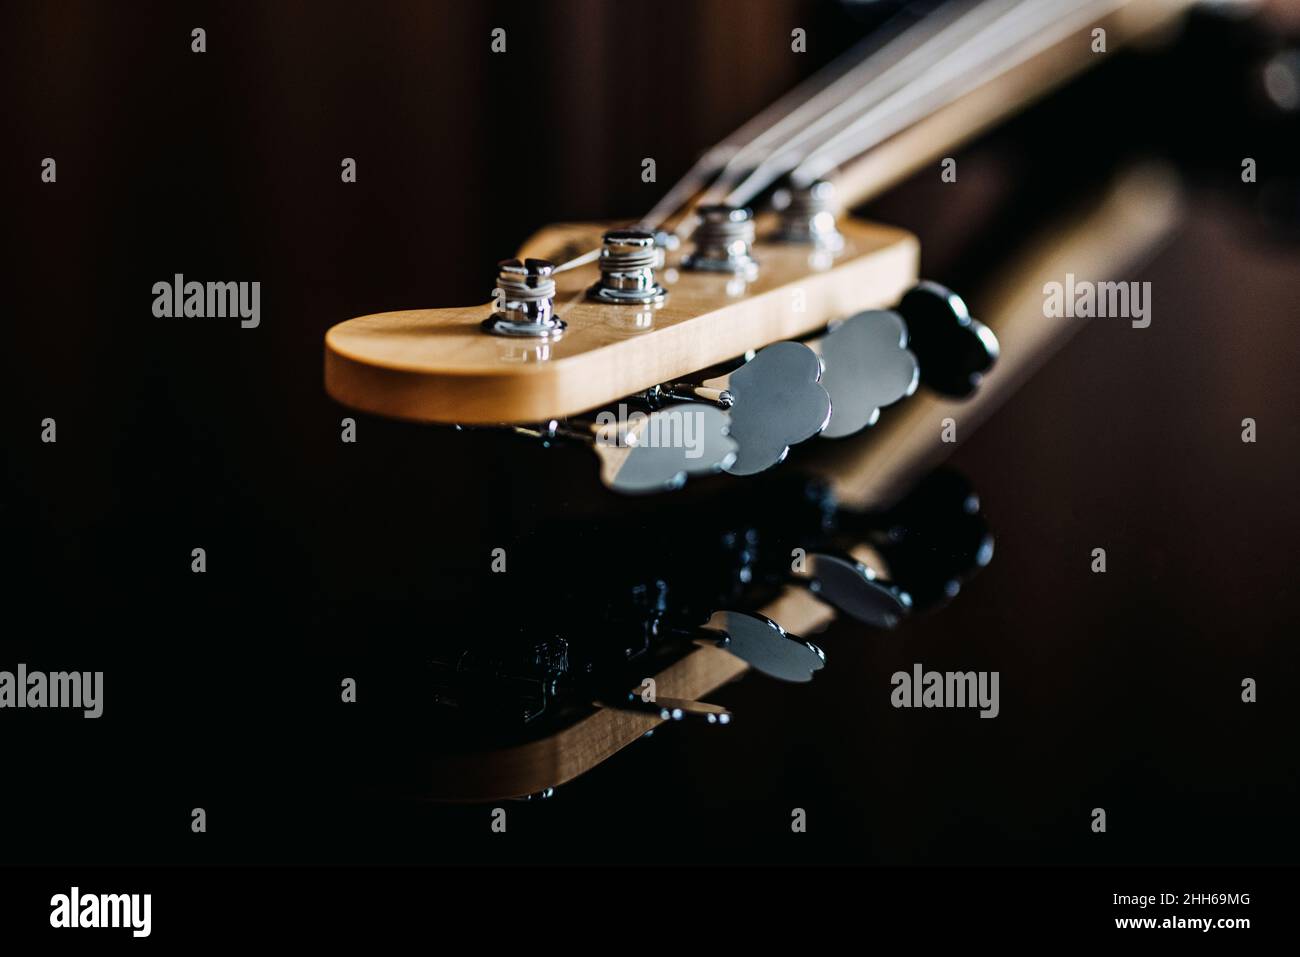 Studio shot of guitar headstock and tuning pegs Stock Photo